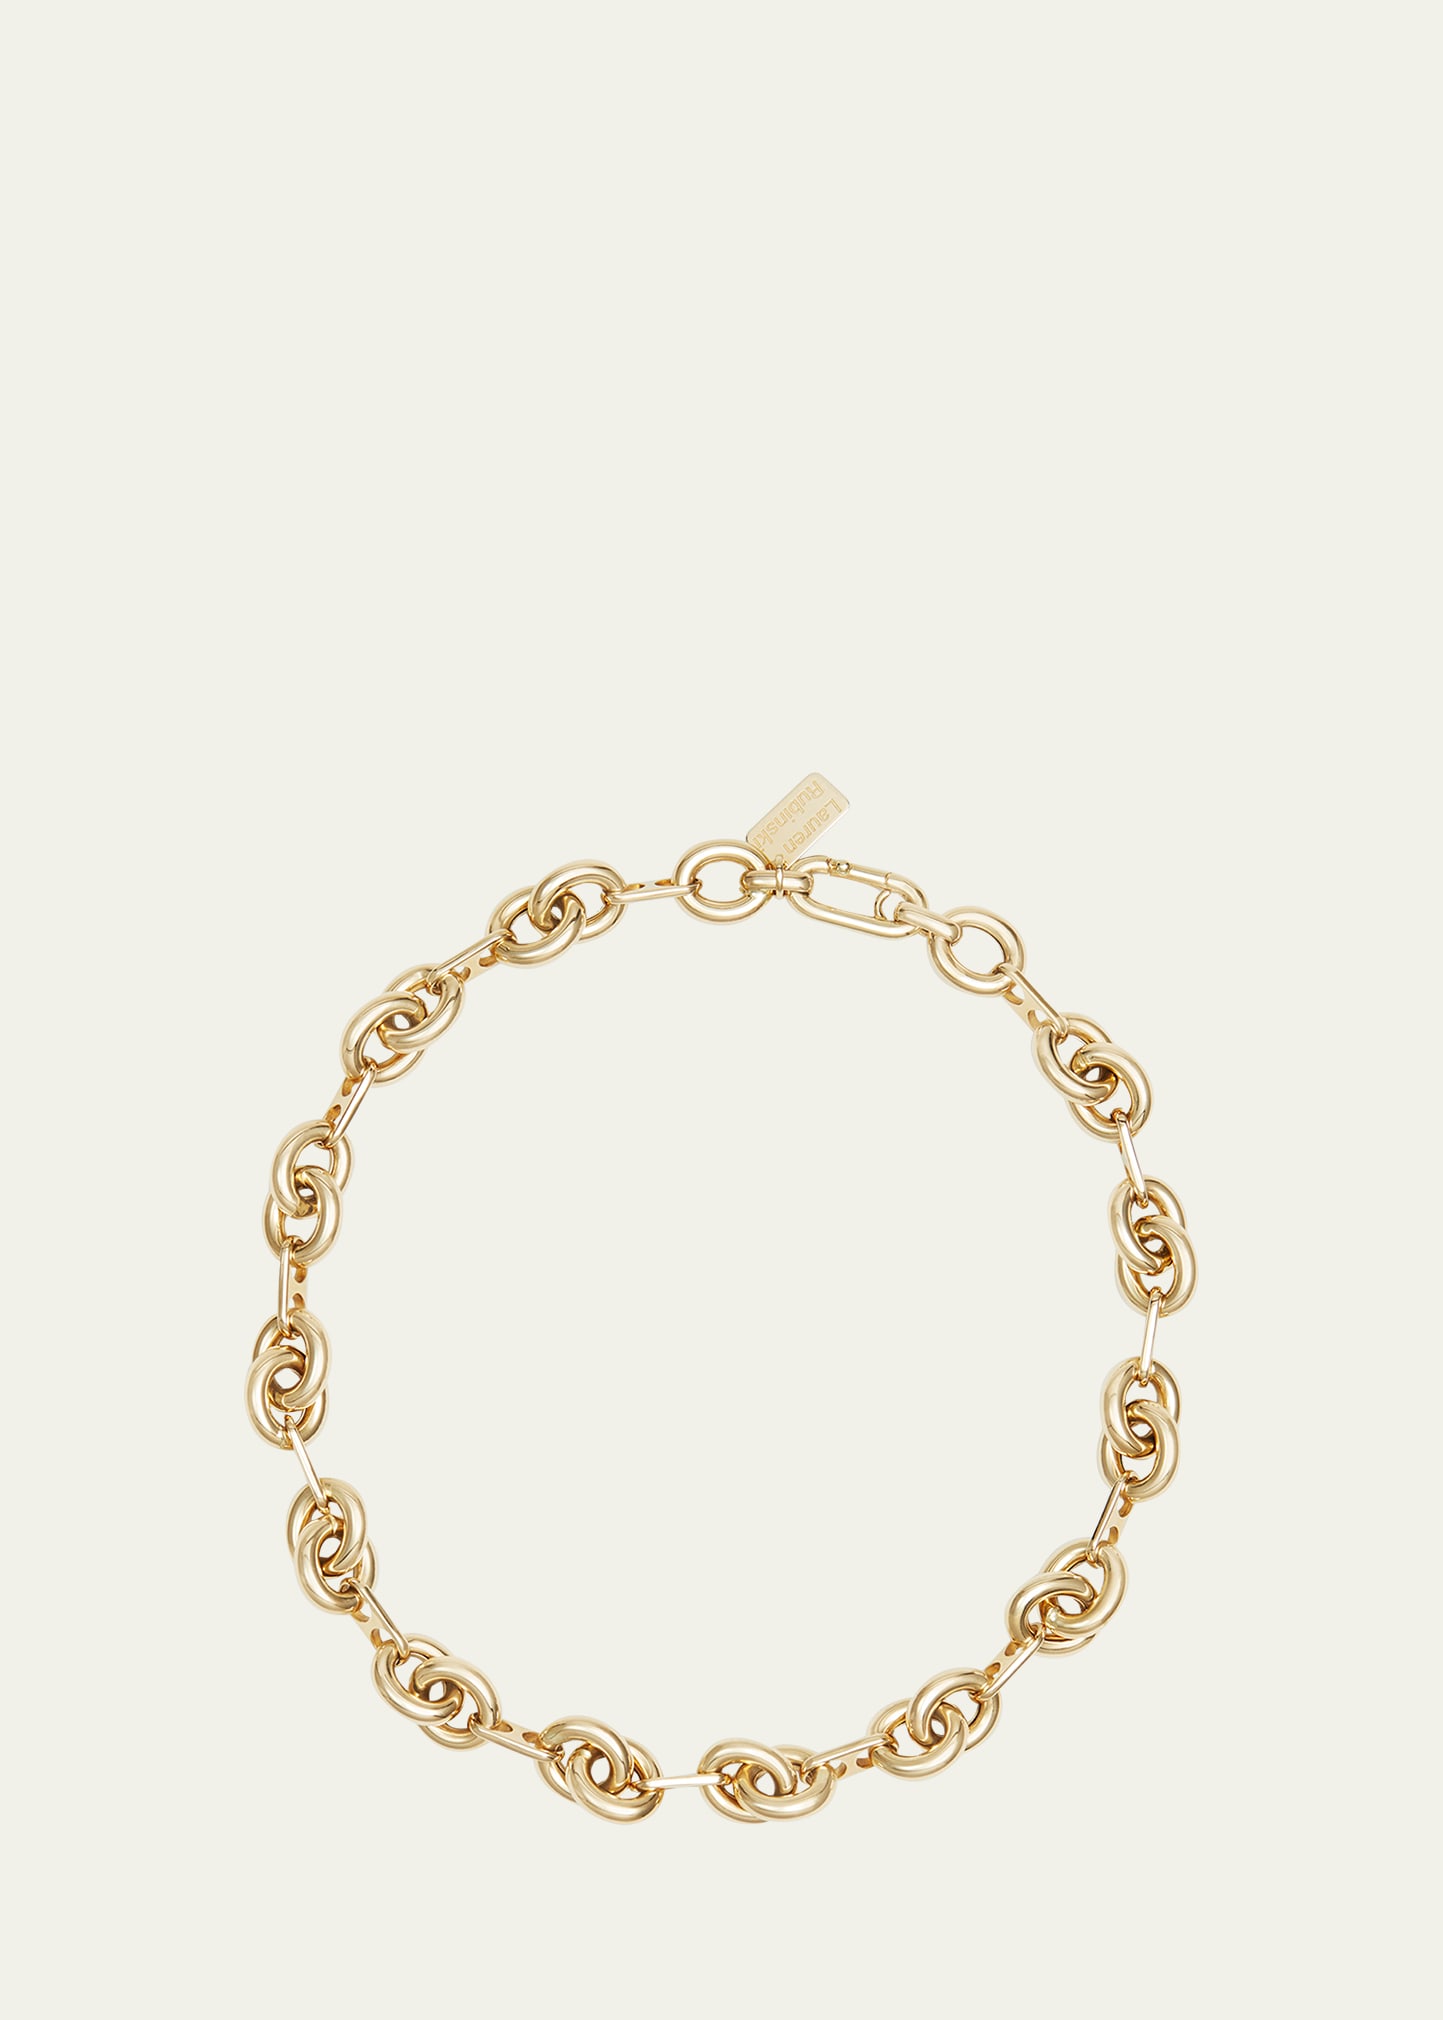 Lauren Rubinski Lr16 Round Double Link Short Necklace in 14K Yellow Gold with Extender